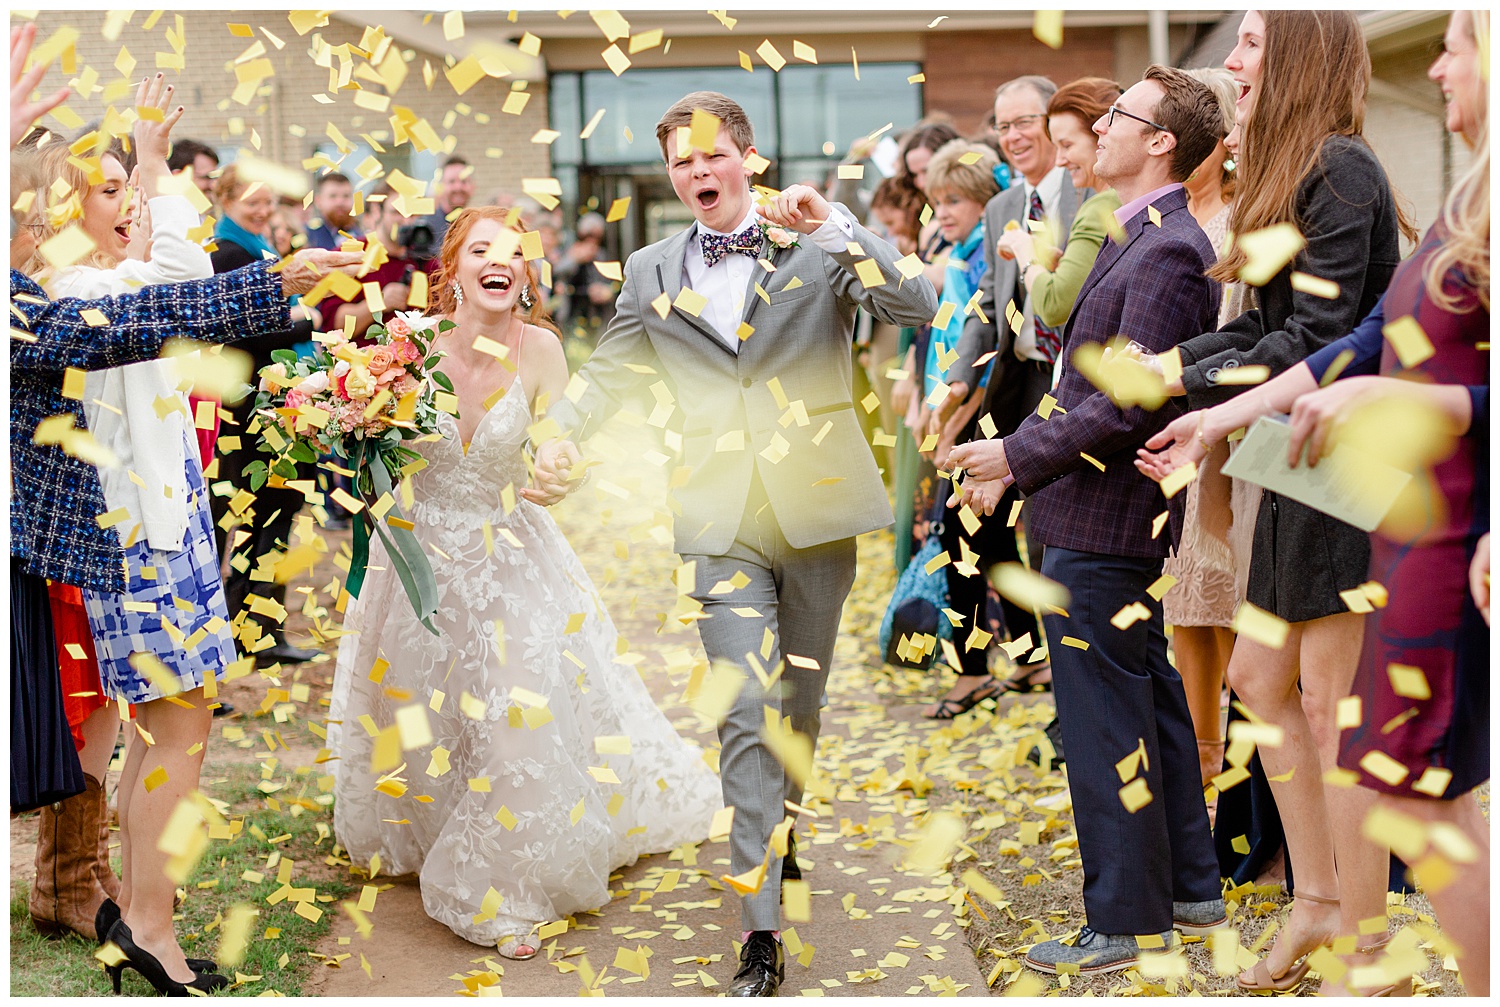 Bride and groom walking through confetti at their rainy spring wedding.